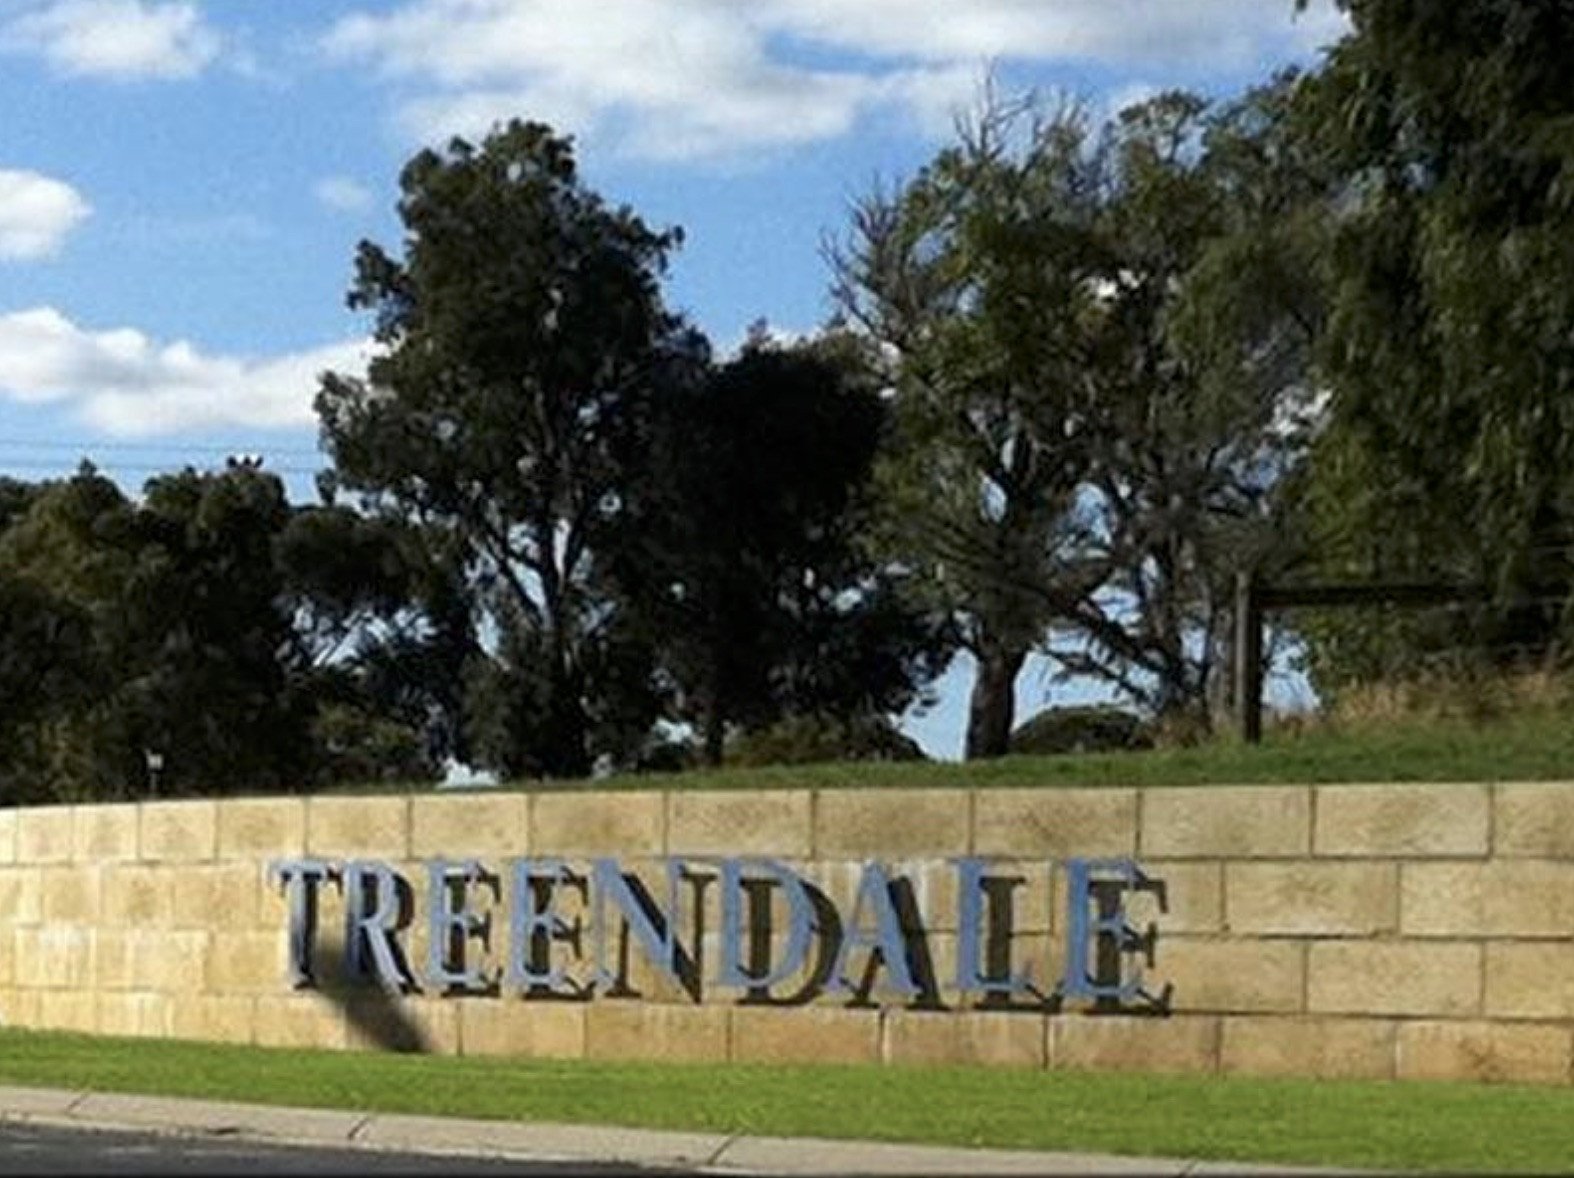 Treendale-2-2